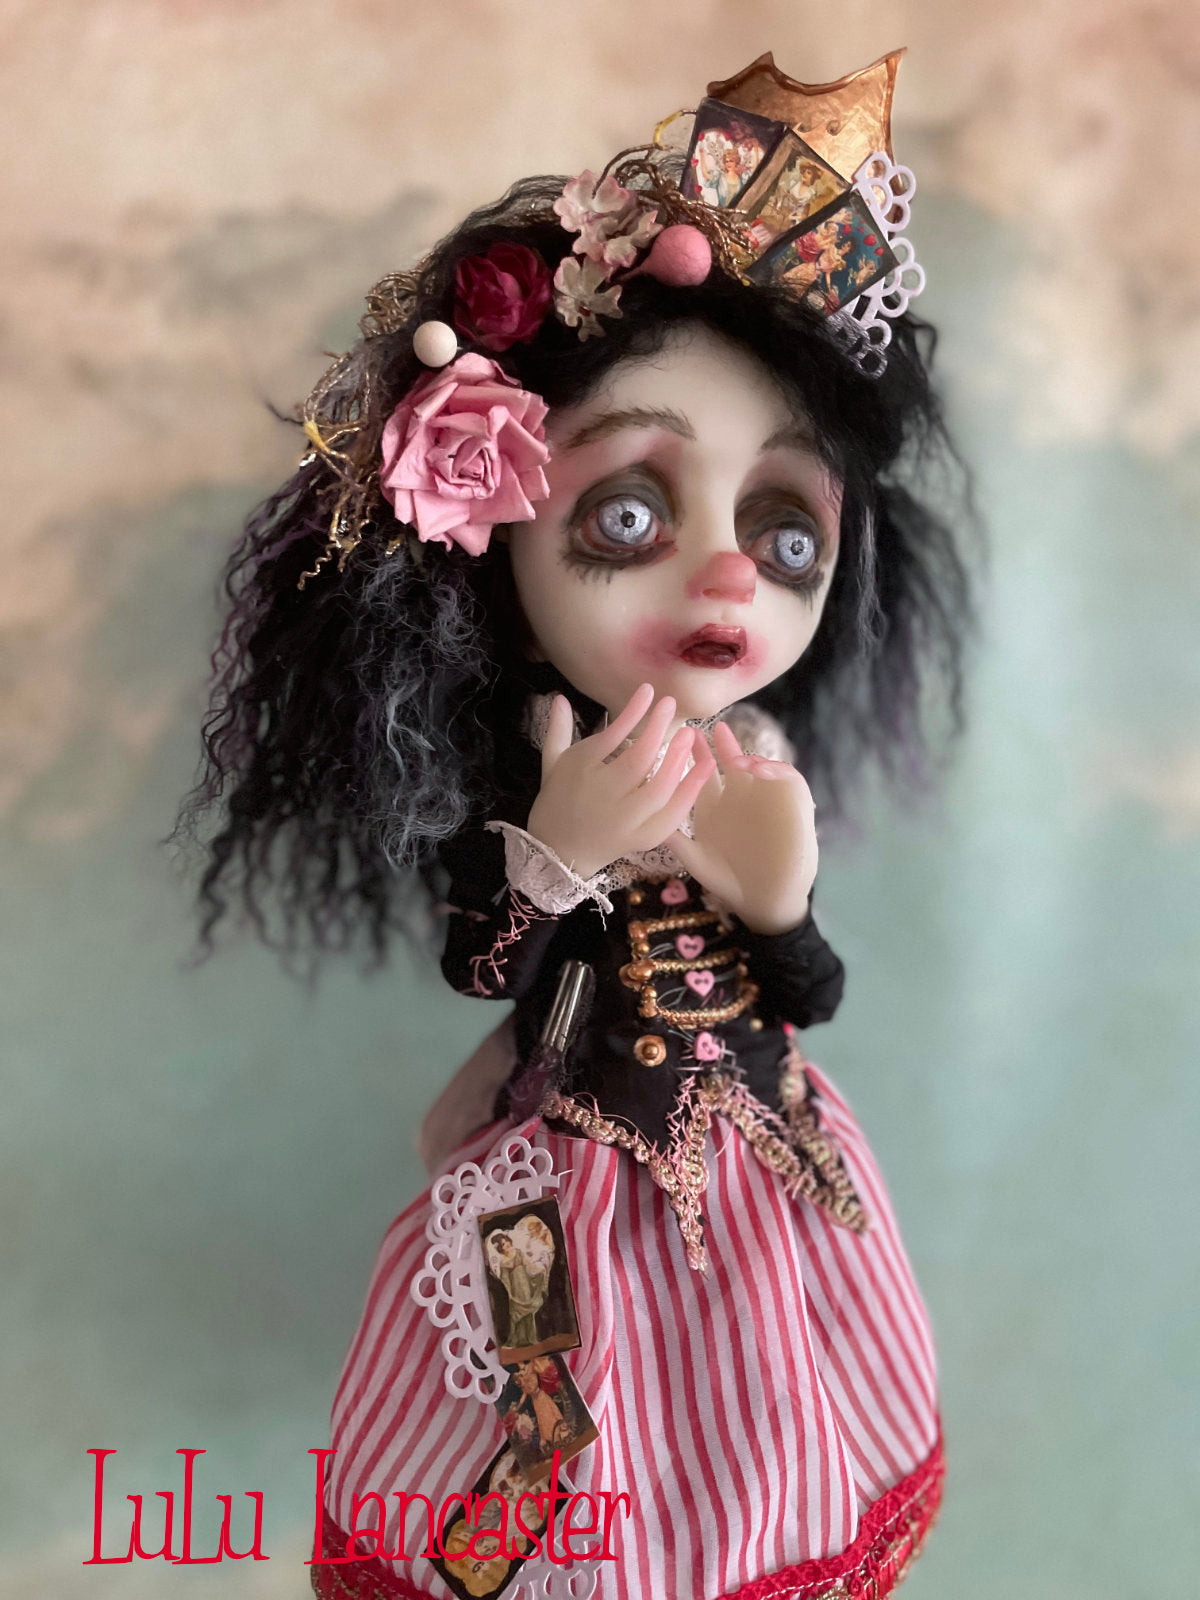 Princess Valentine of broken hearts Original LuLu Lancaster Art Doll